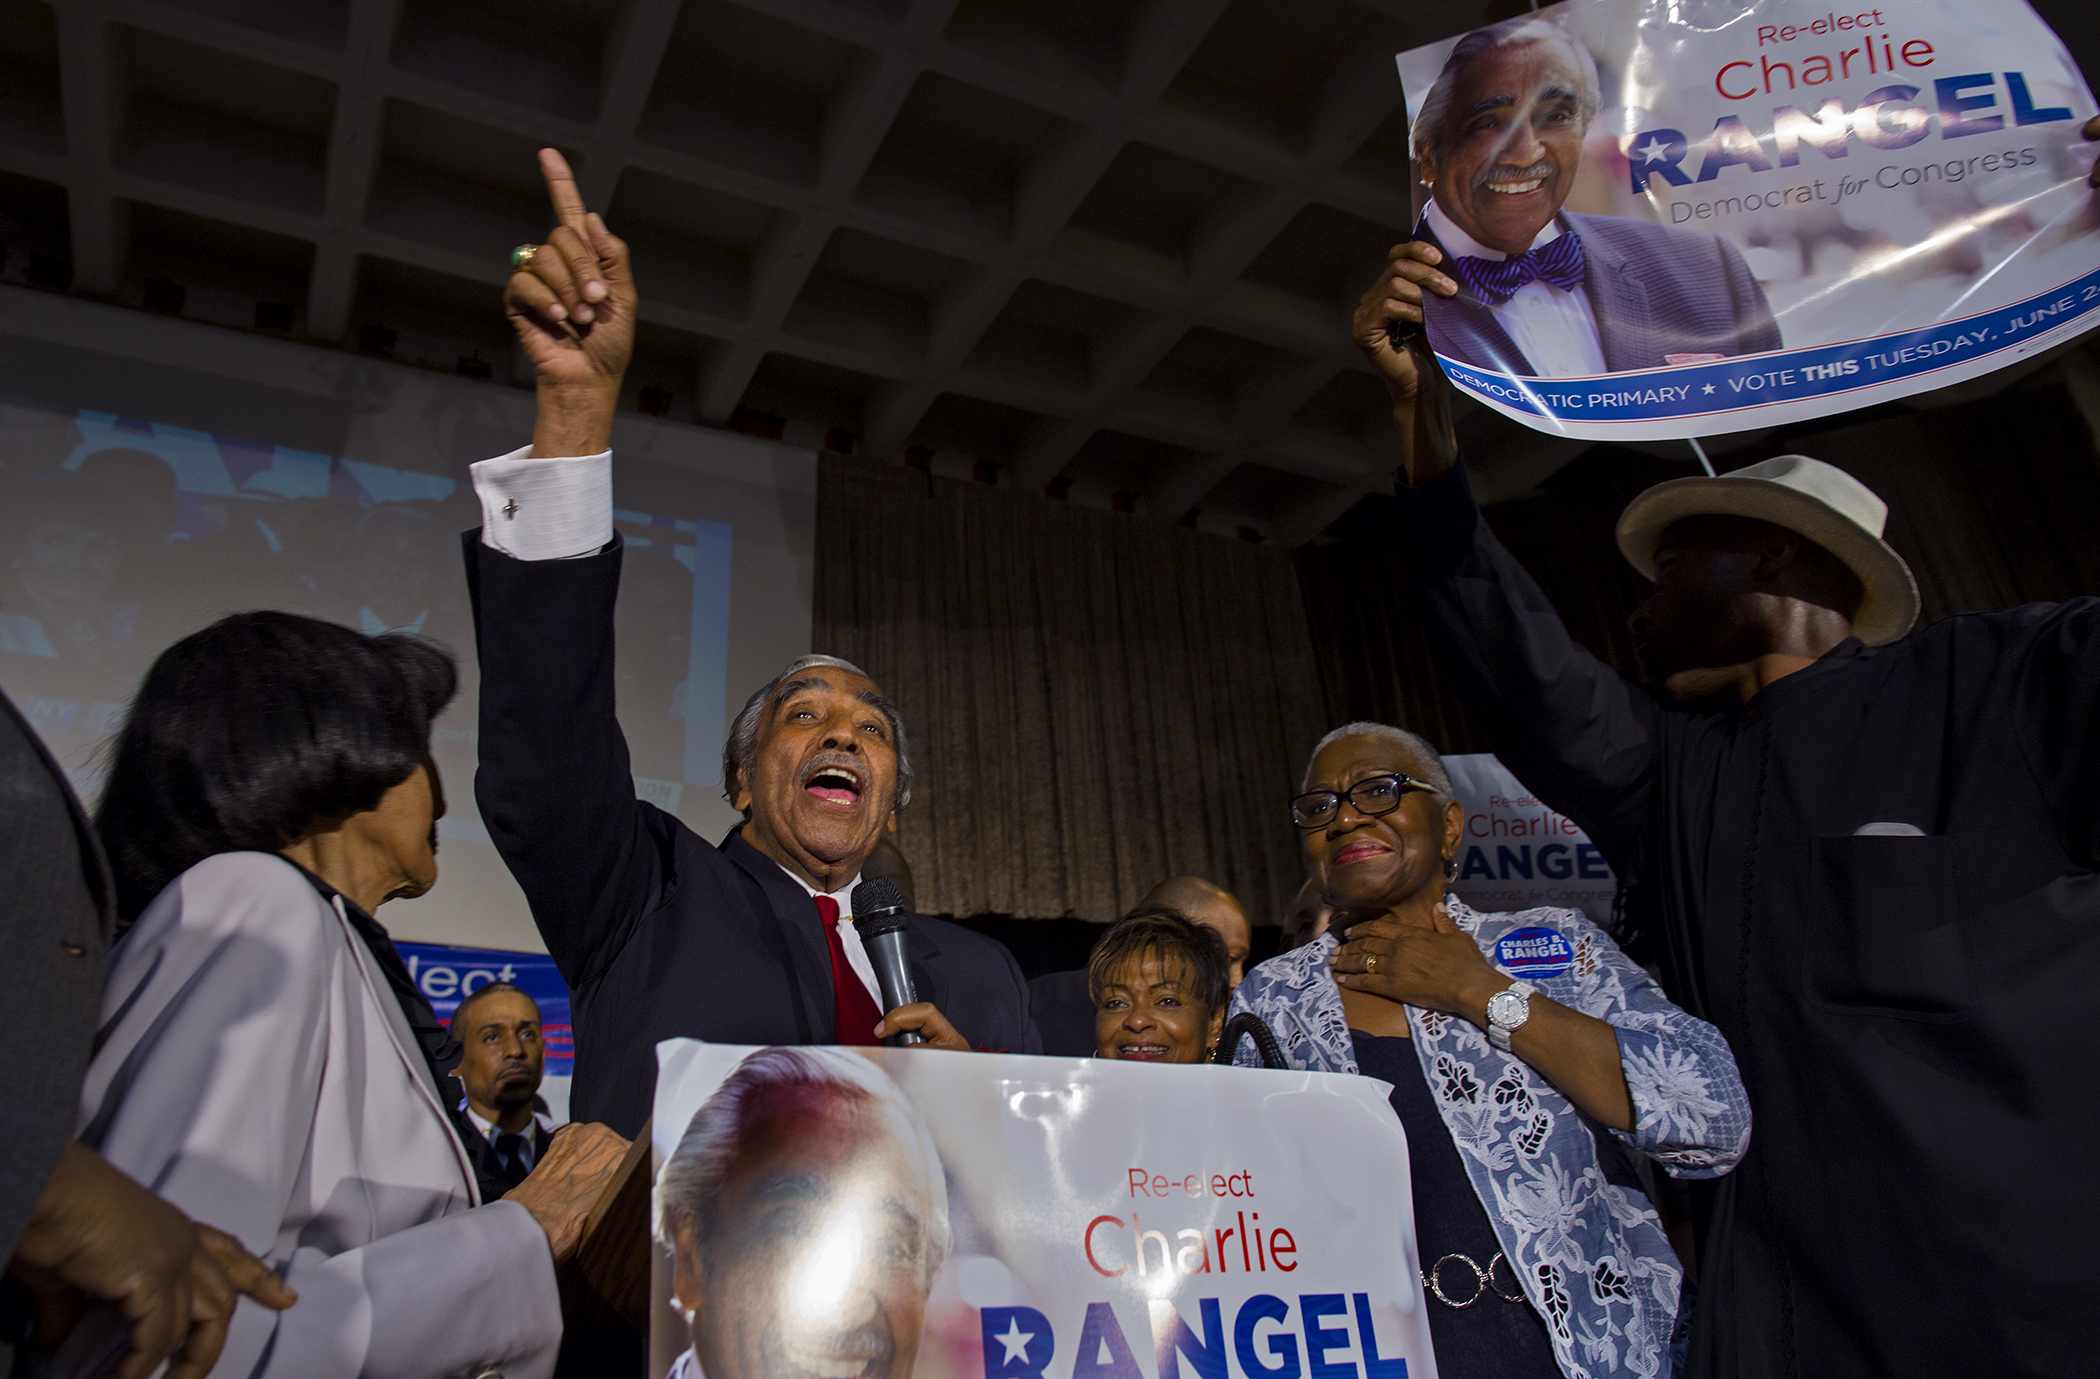  Rep. Charlie Rangel wins primary, 44th year in office, Harlem, 2014 